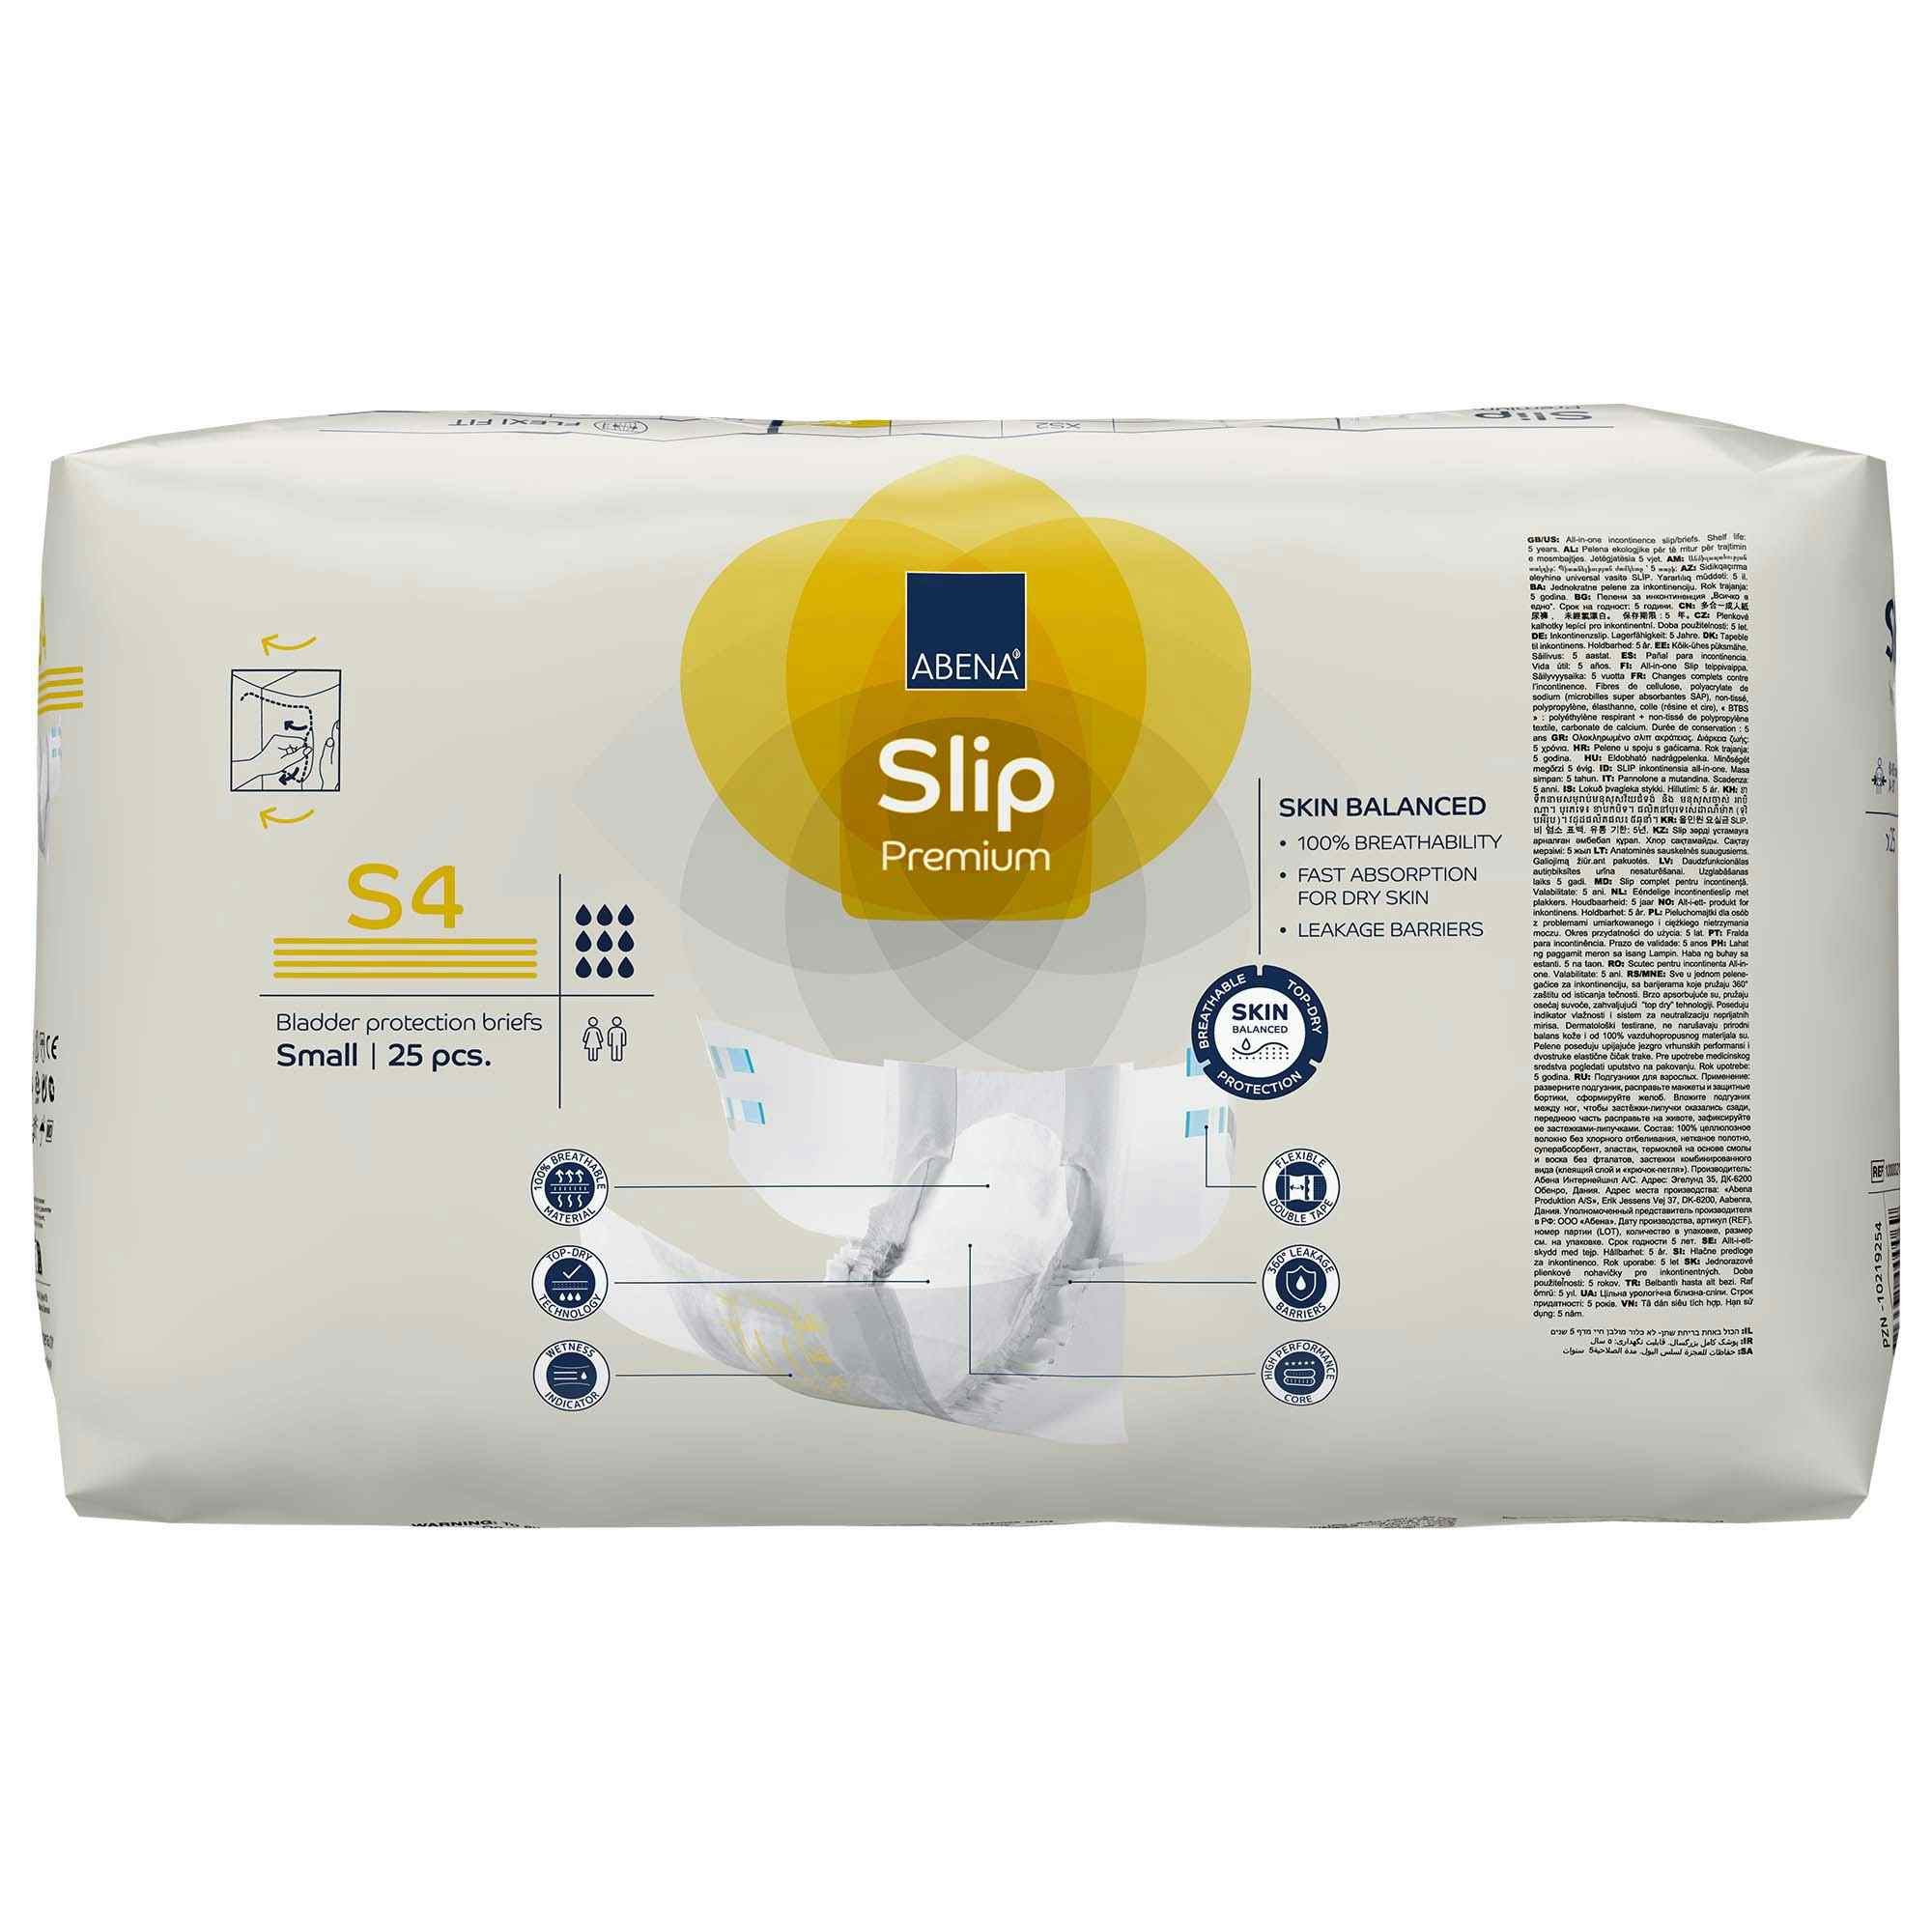 Abena Slip Premium Diapers with Tabs, Level 4s